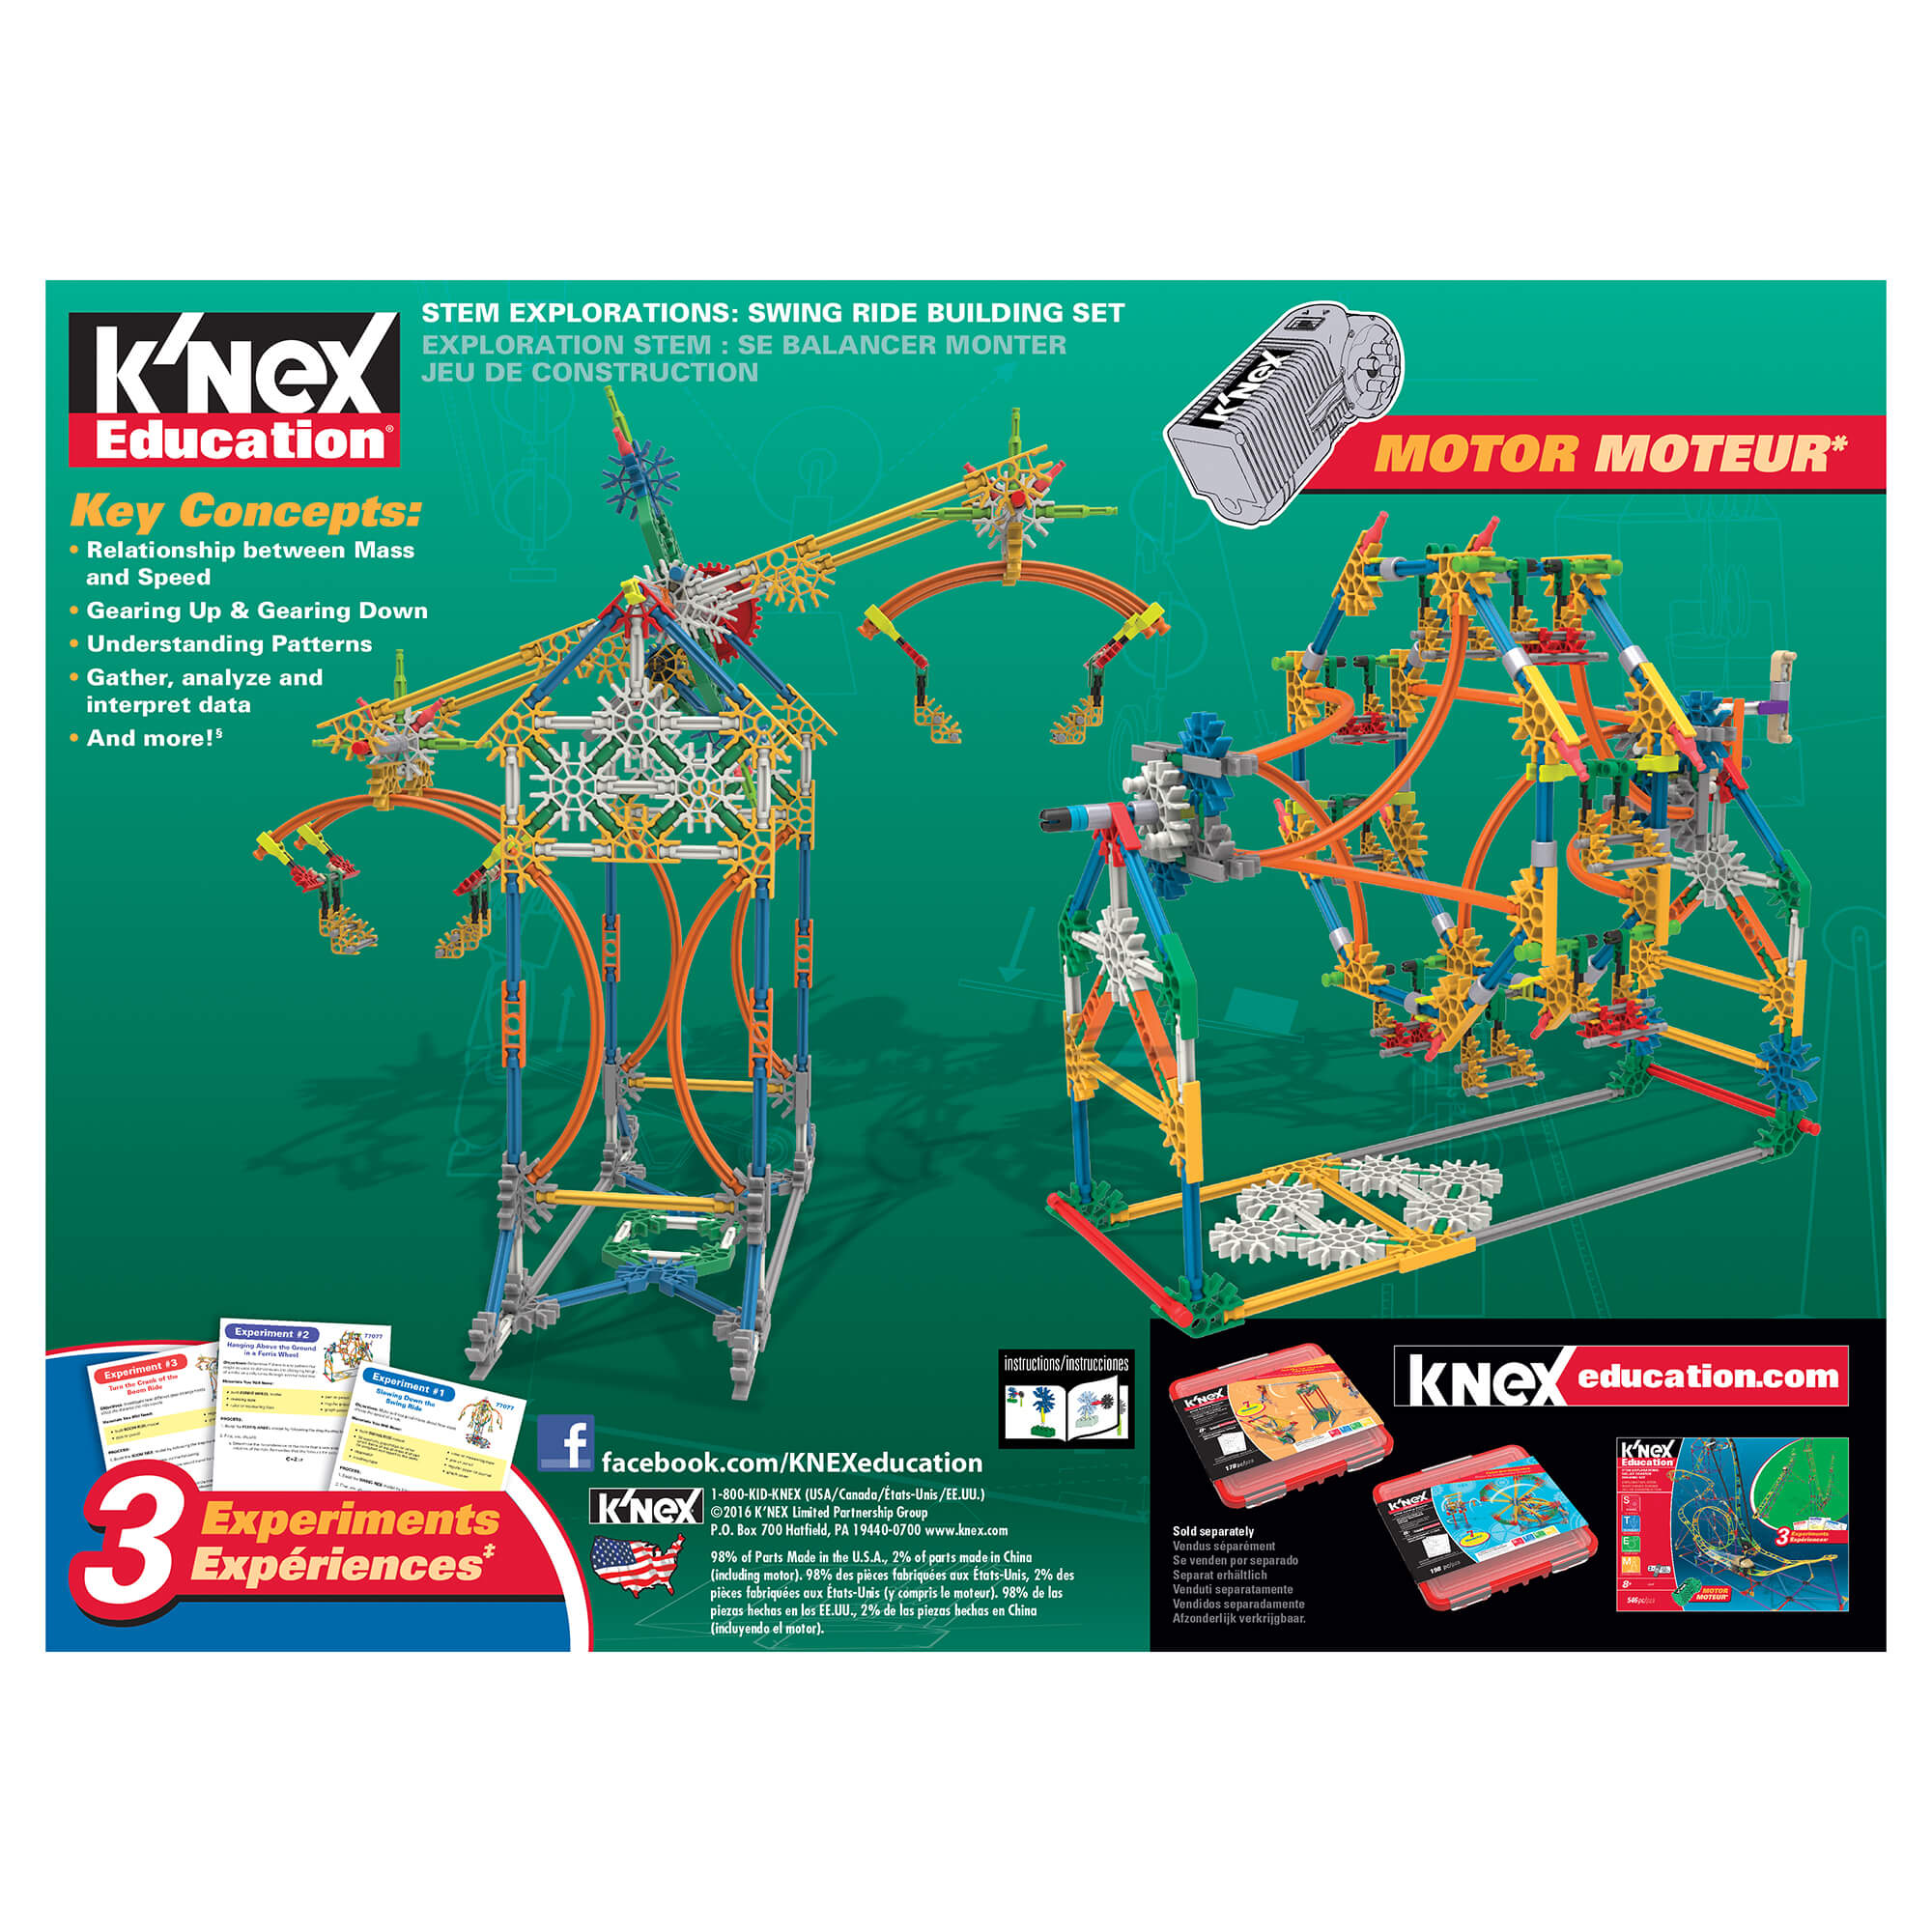 K'NEX Education STEM Explorations: Swing Ride Building Set